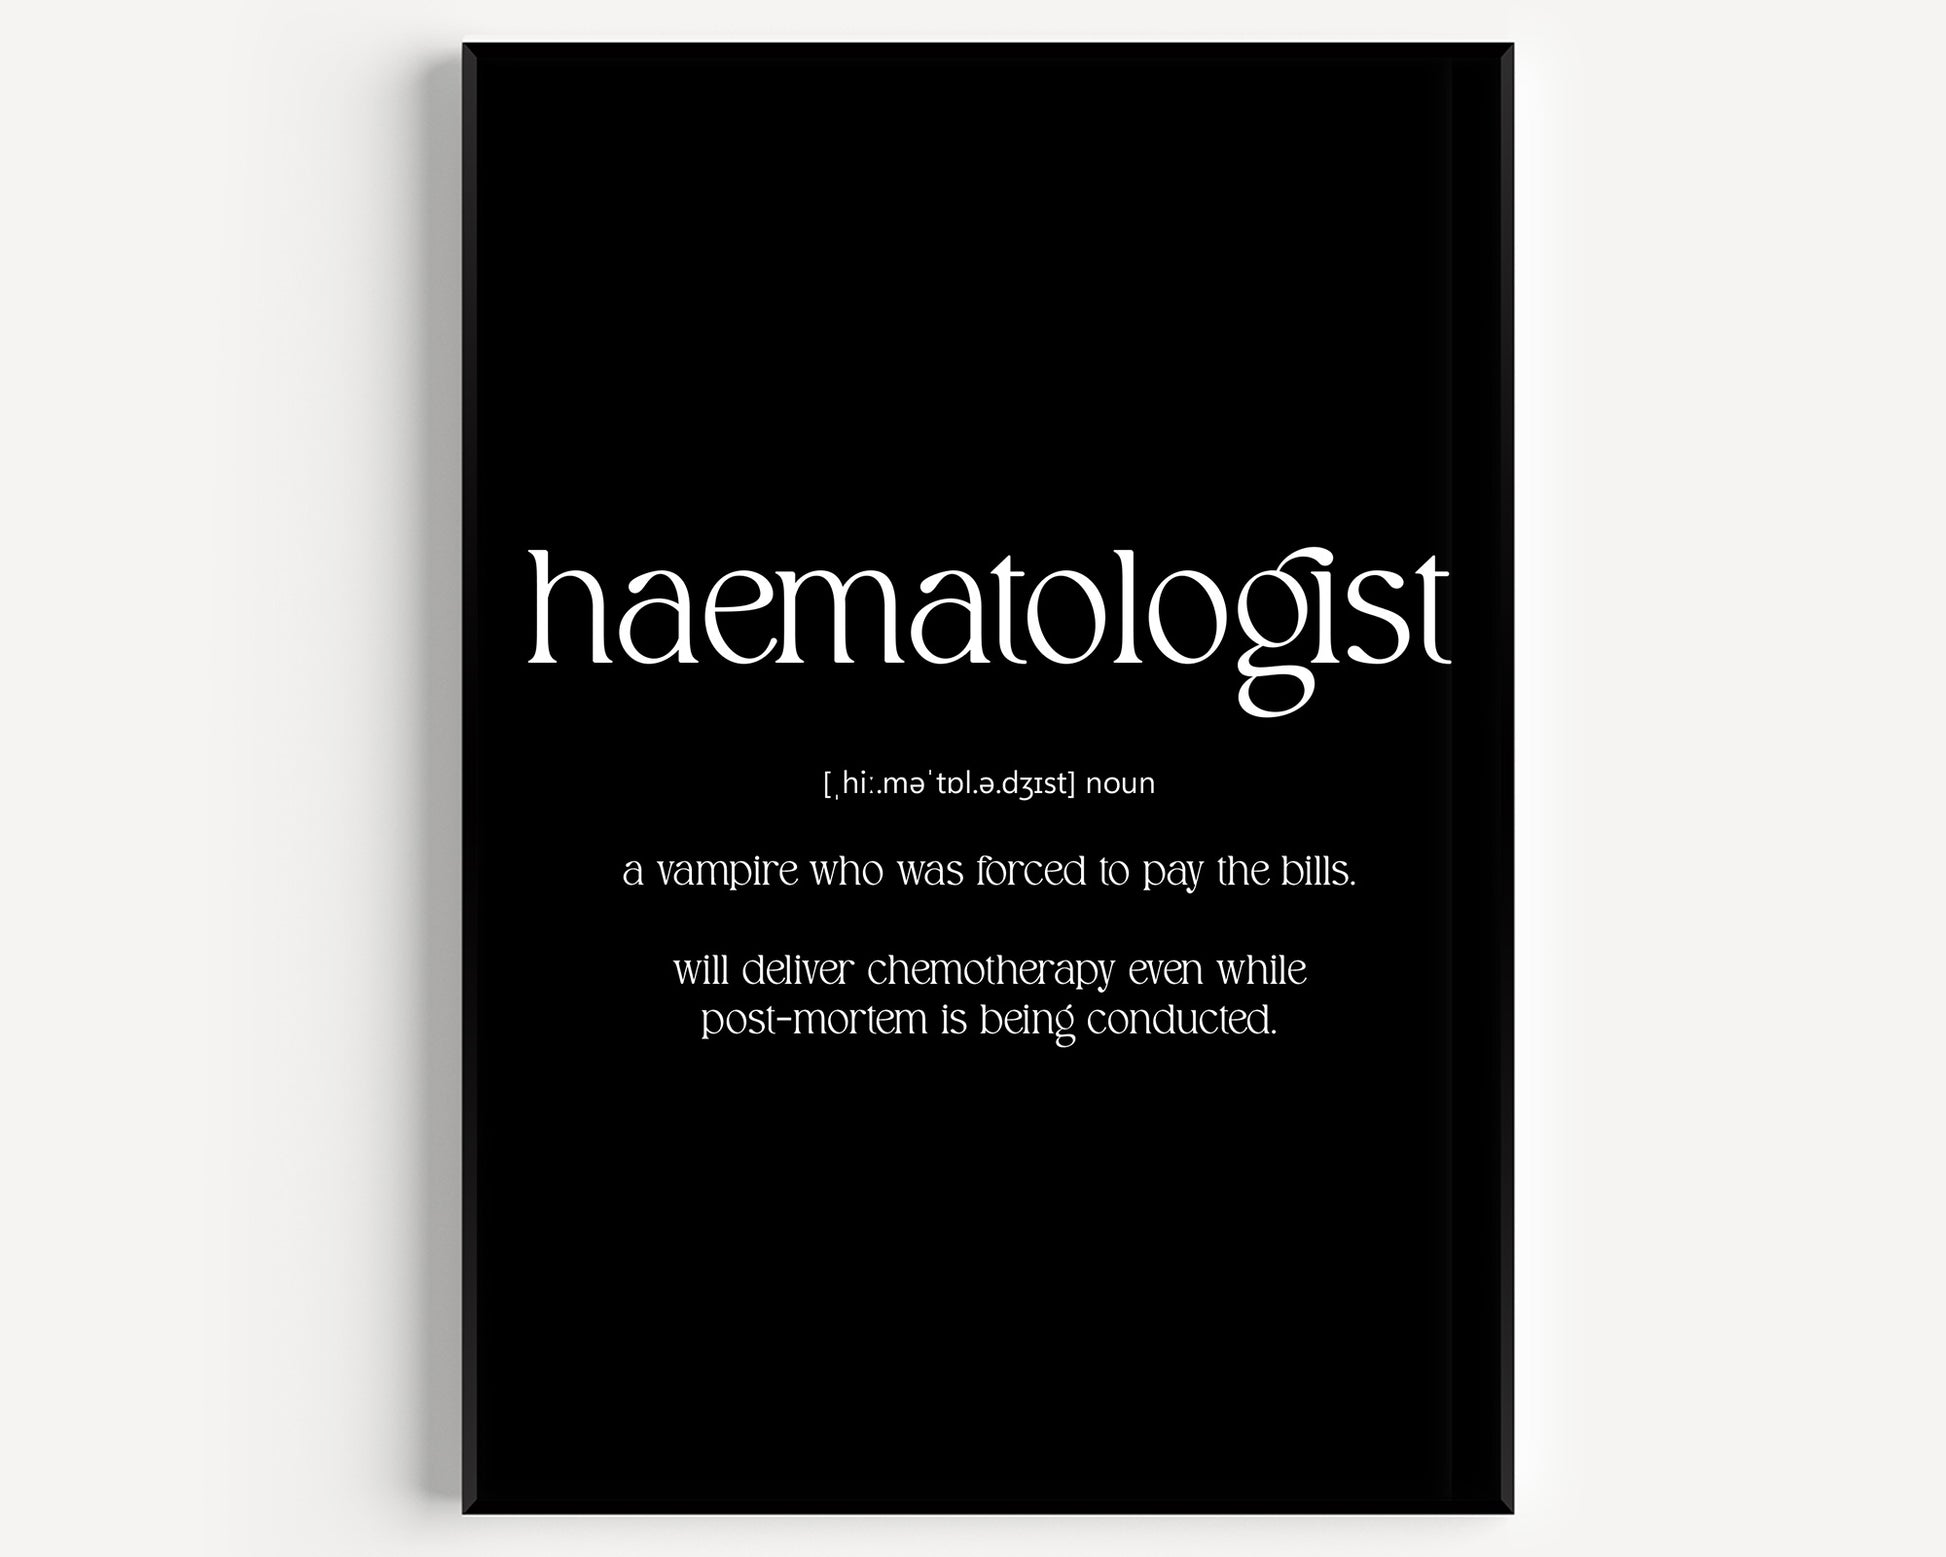 Haematologist Definition Print - Magic Posters